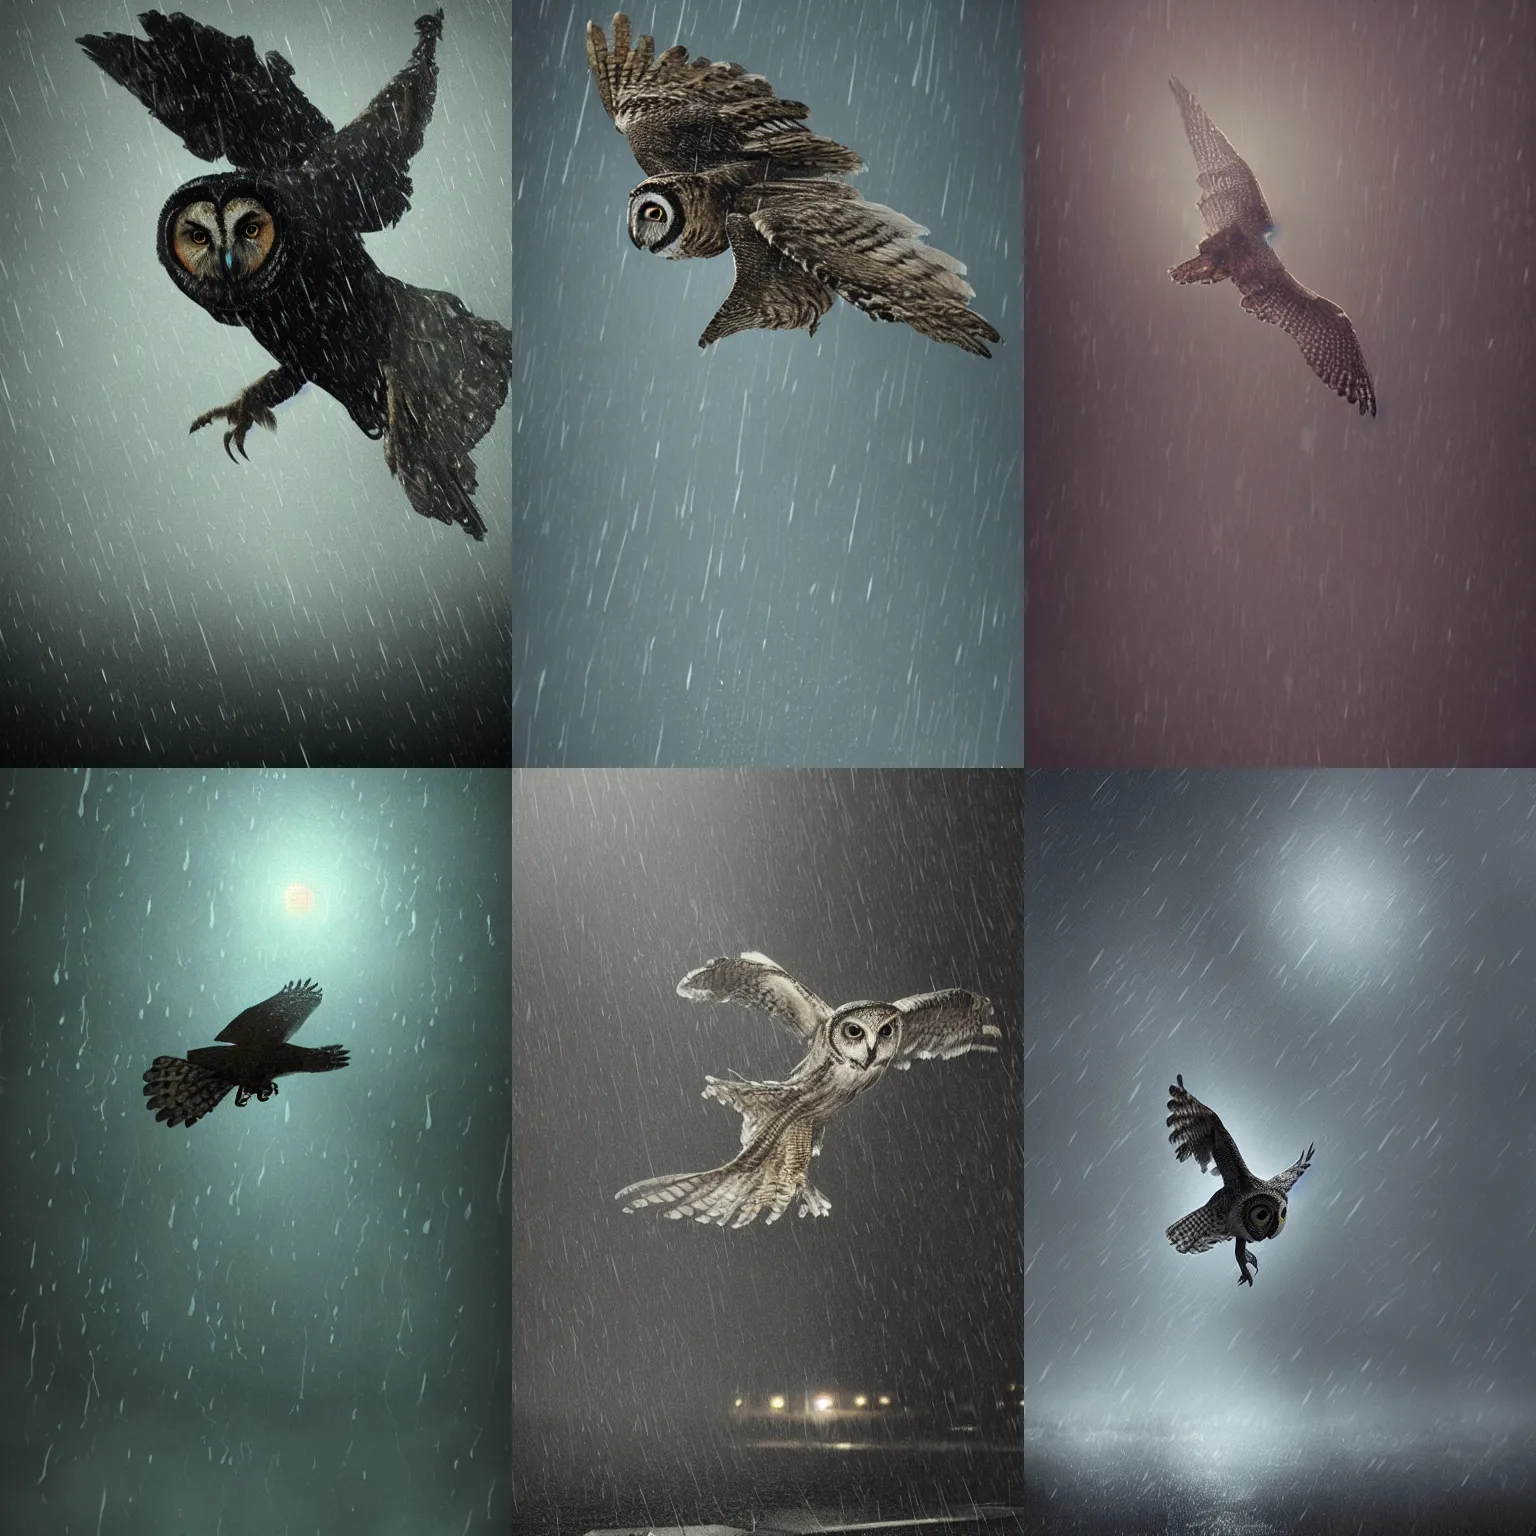 Prompt: an owl flying through the rain, night, dramatic lighting, trending on artstation